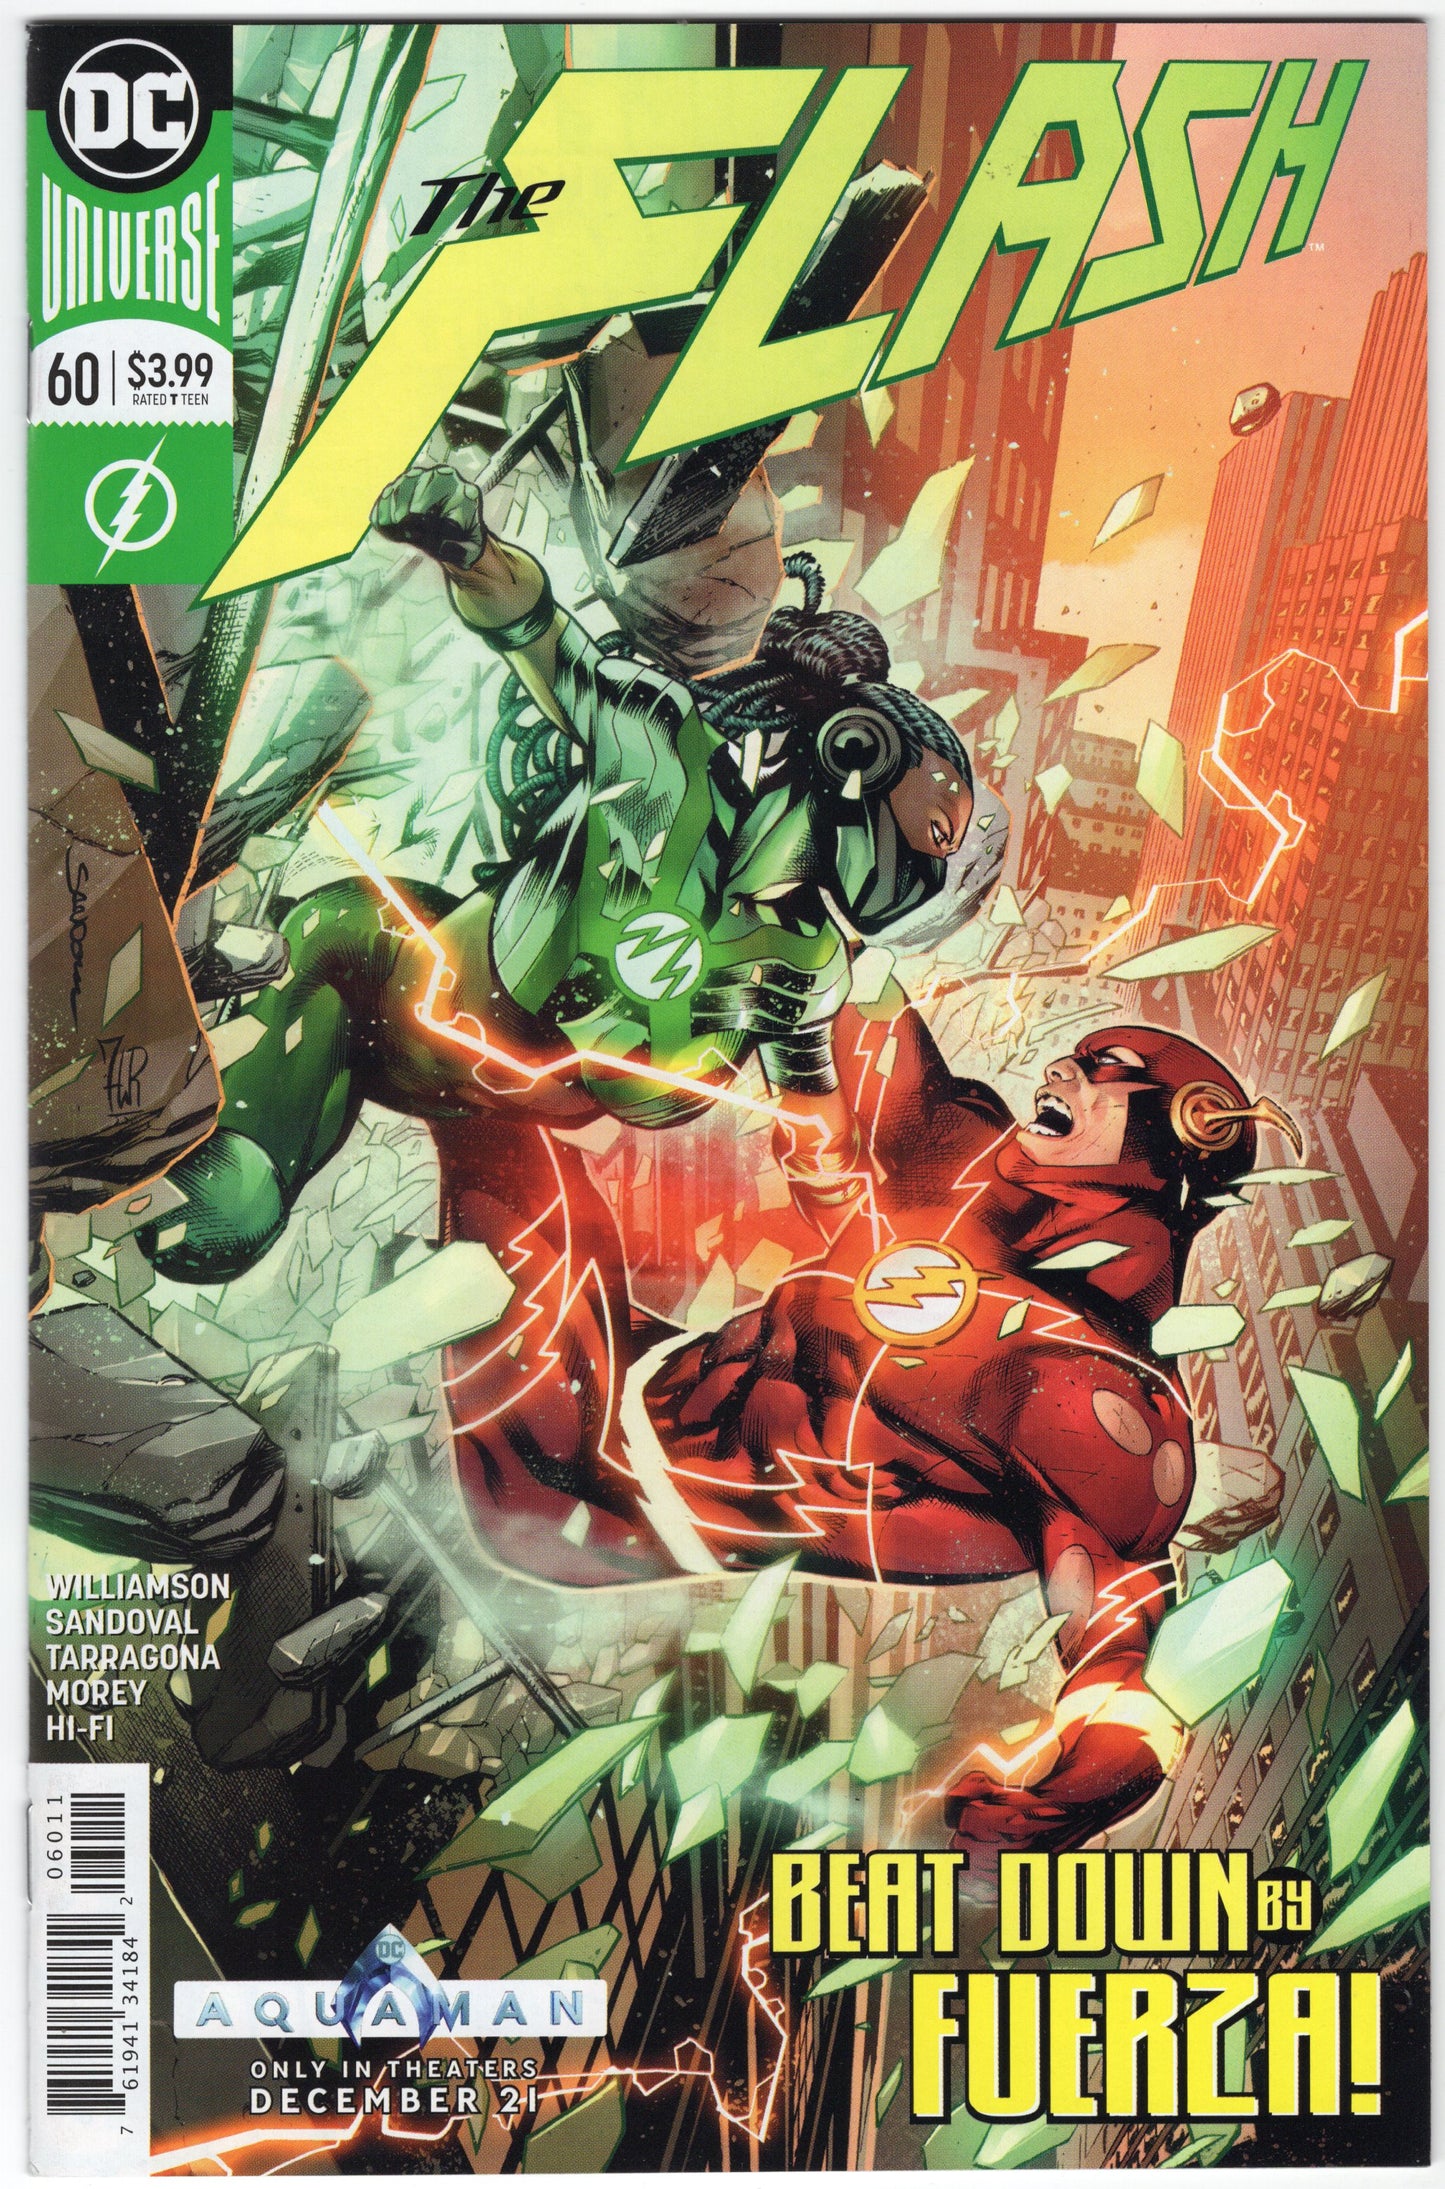 The Flash - Issue #60 (Feb. 2019 - DC Comics) NM